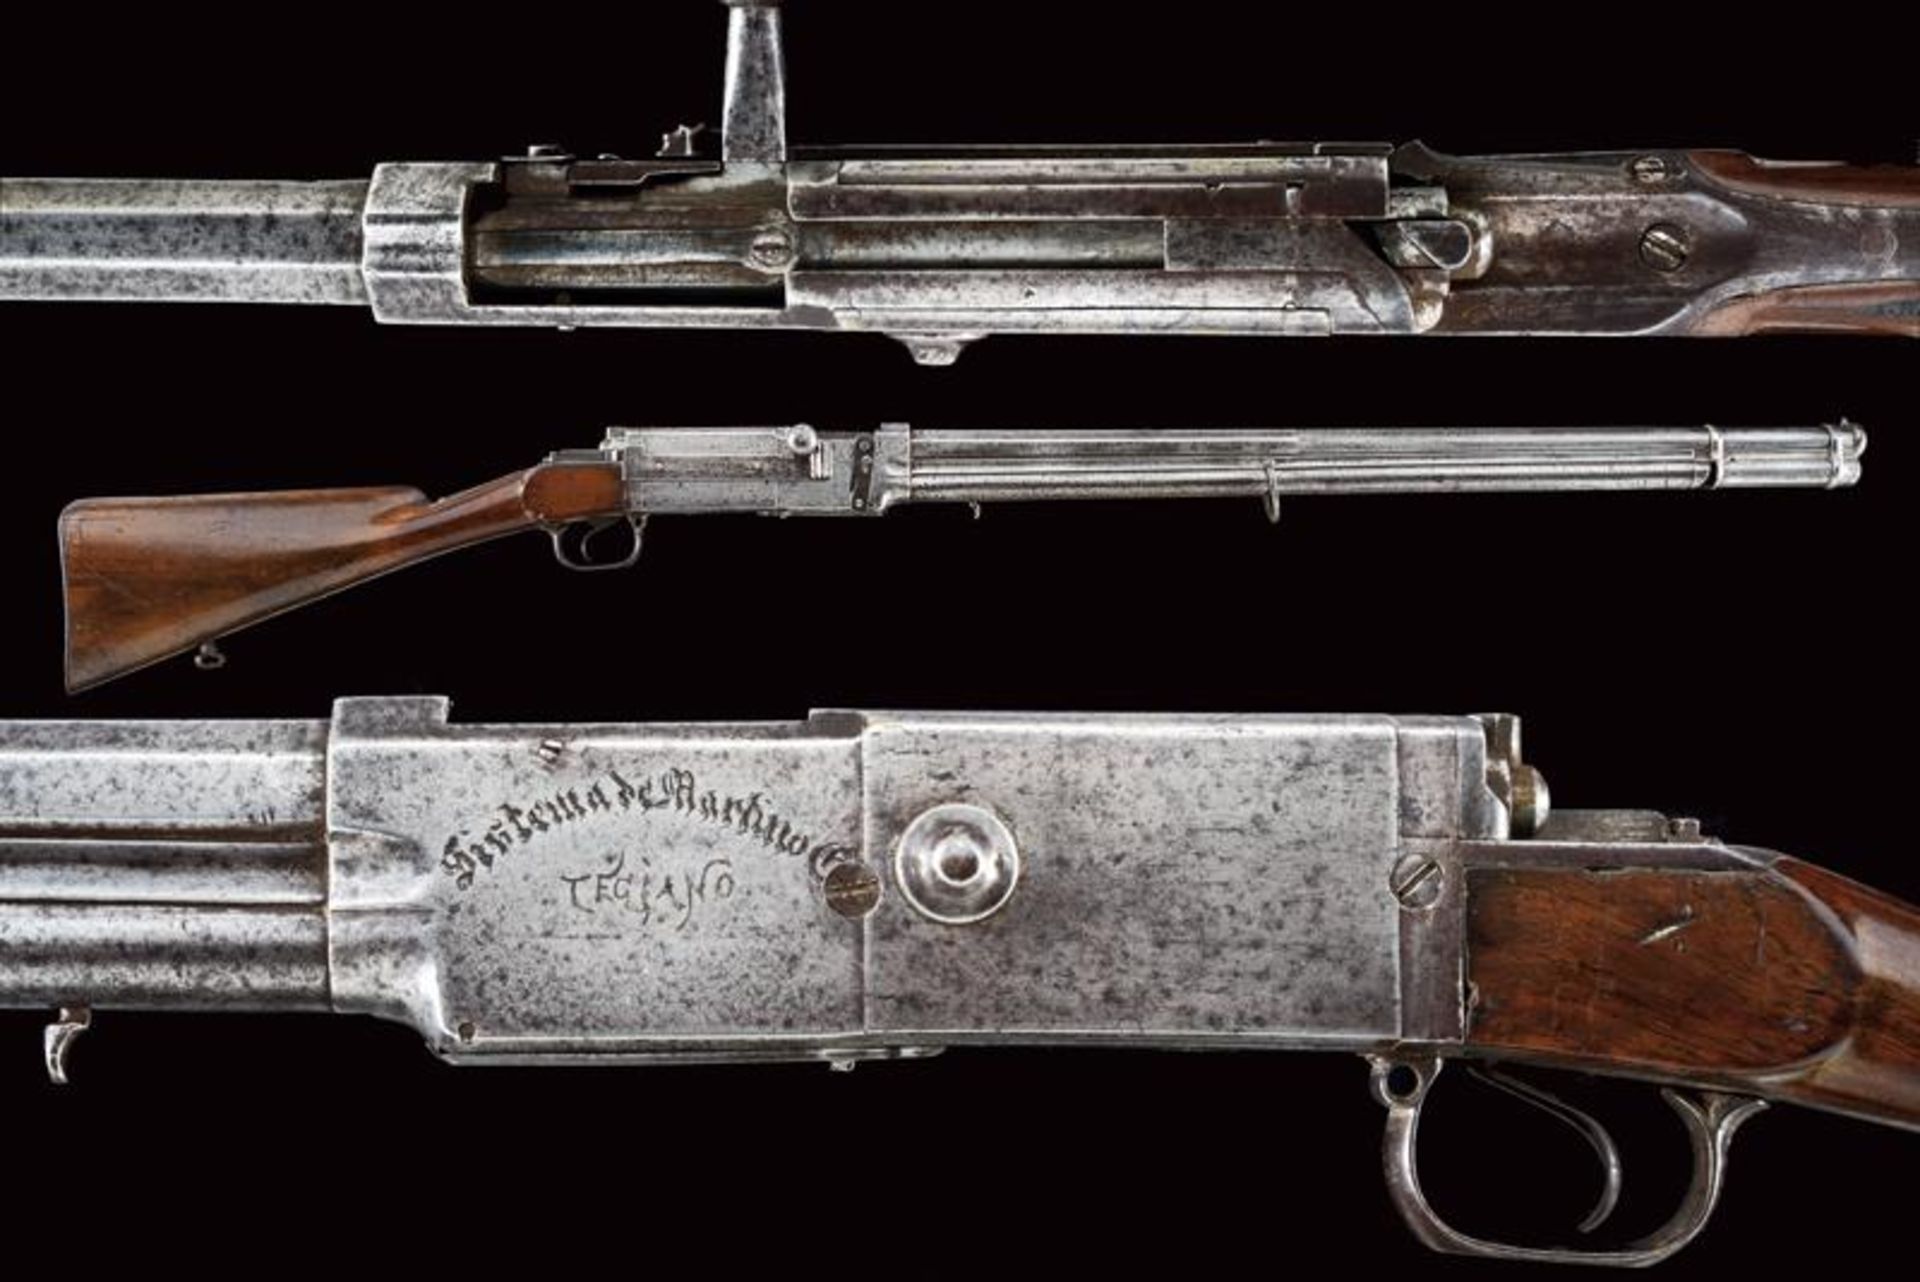 A very rare prototype of a de Martino-system repeating gun